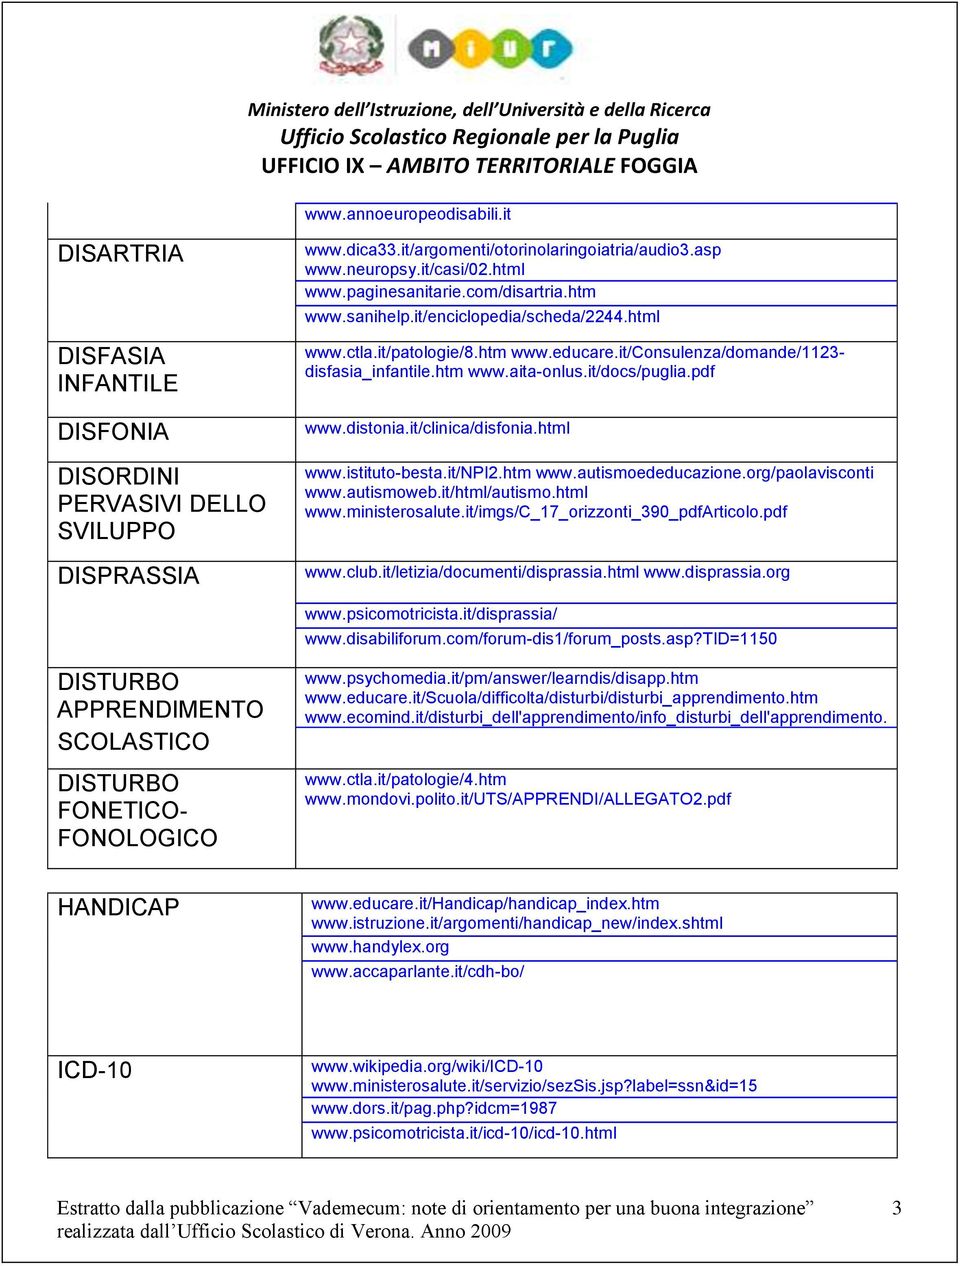 it/docs/puglia.pdf www.distonia.it/clinica/disfonia.html www.istituto-besta.it/npi2.htm www.autismoededucazione.org/paolavisconti www.autismoweb.it/html/autismo.html www.ministerosalute.